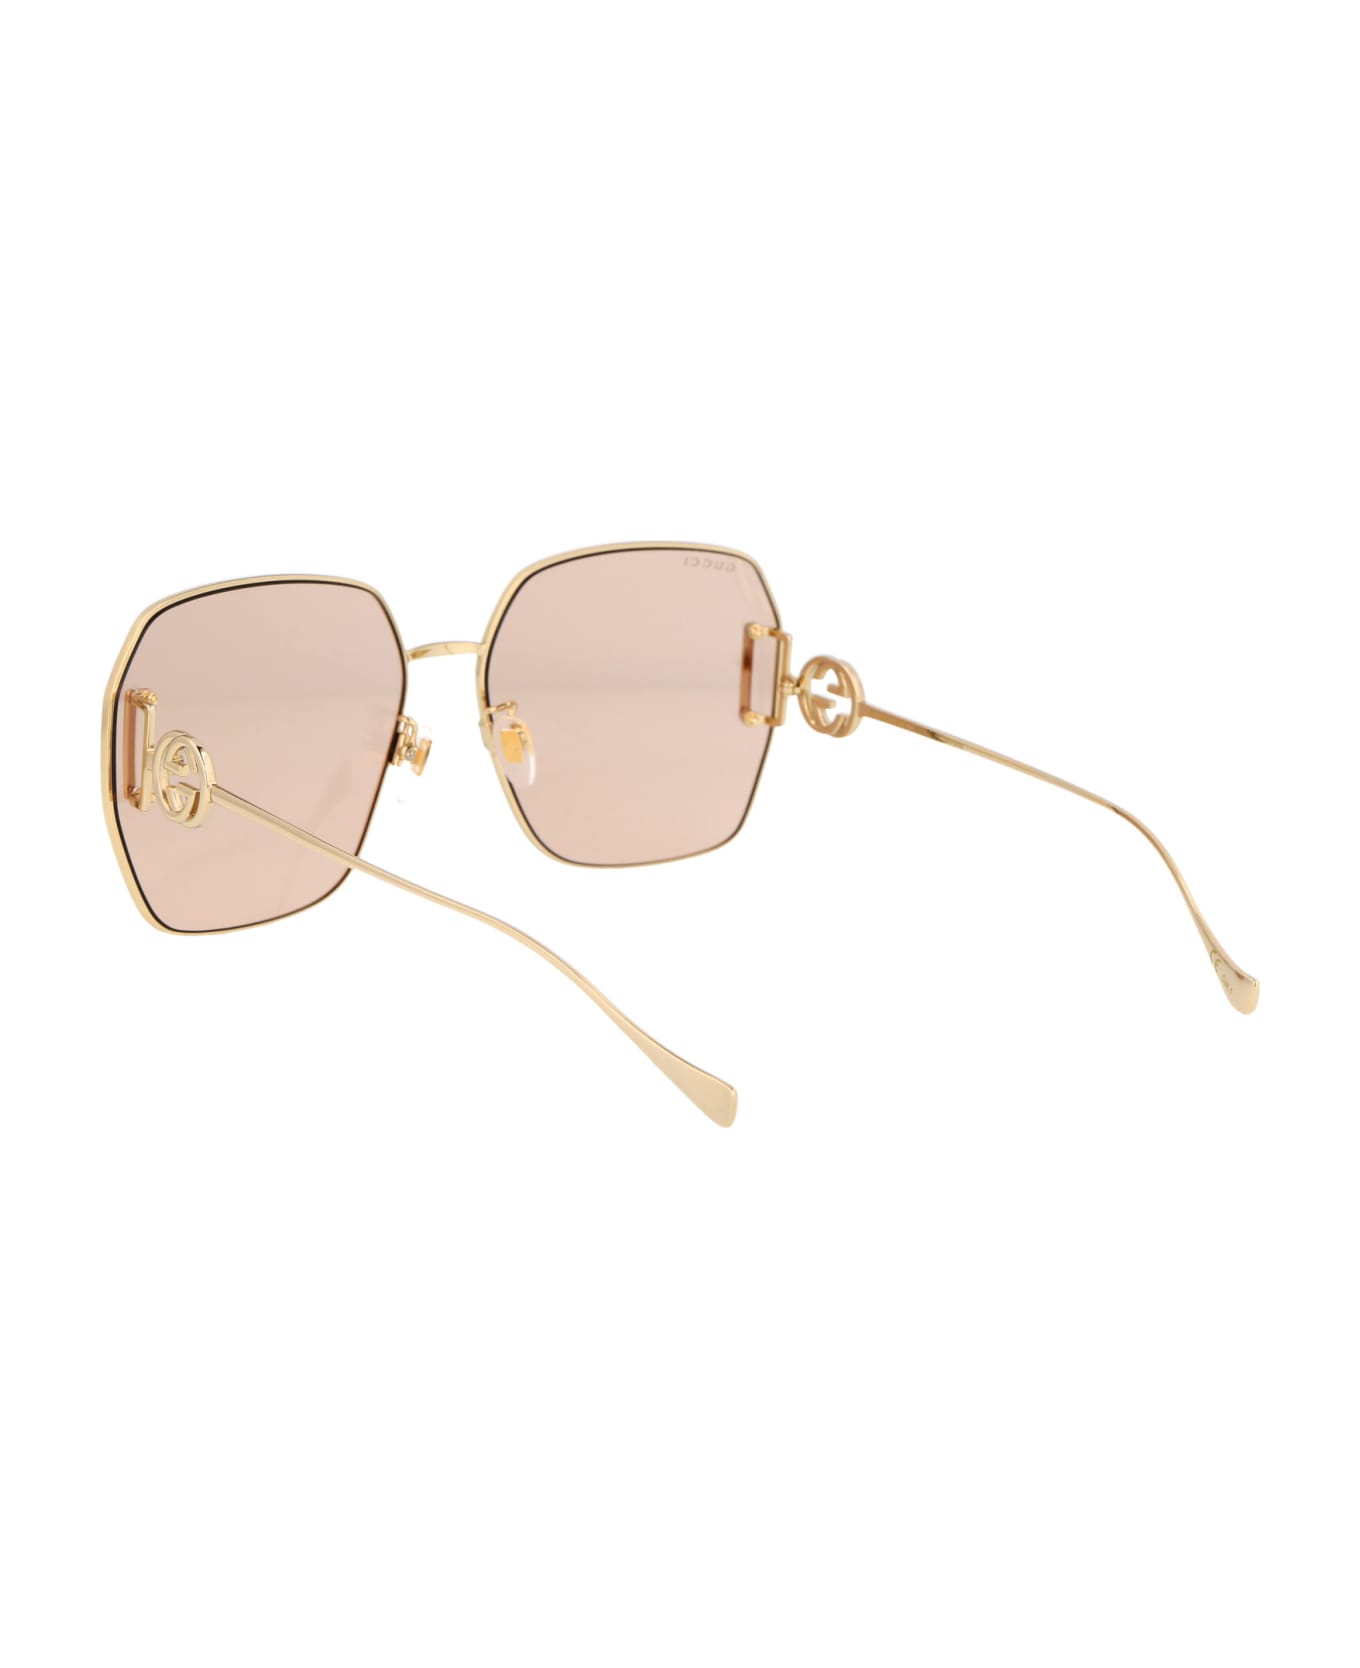 Gucci Eyewear Gg1207sa Sunglasses - 001 GOLD GOLD BROWN サングラス